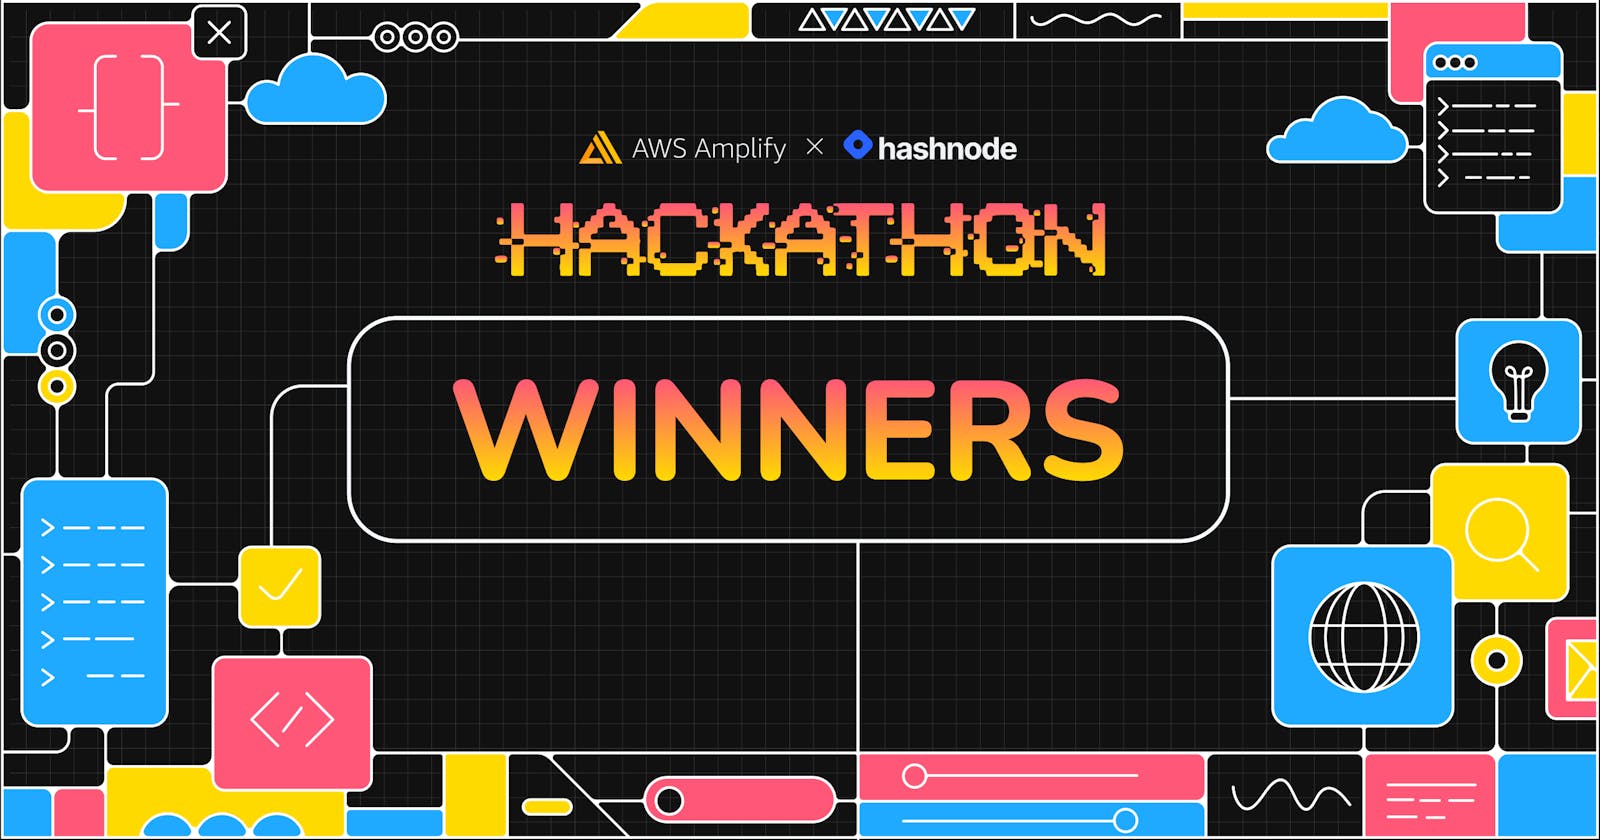 🧡 AWS Amplify x Hashnode Hackathon Winners